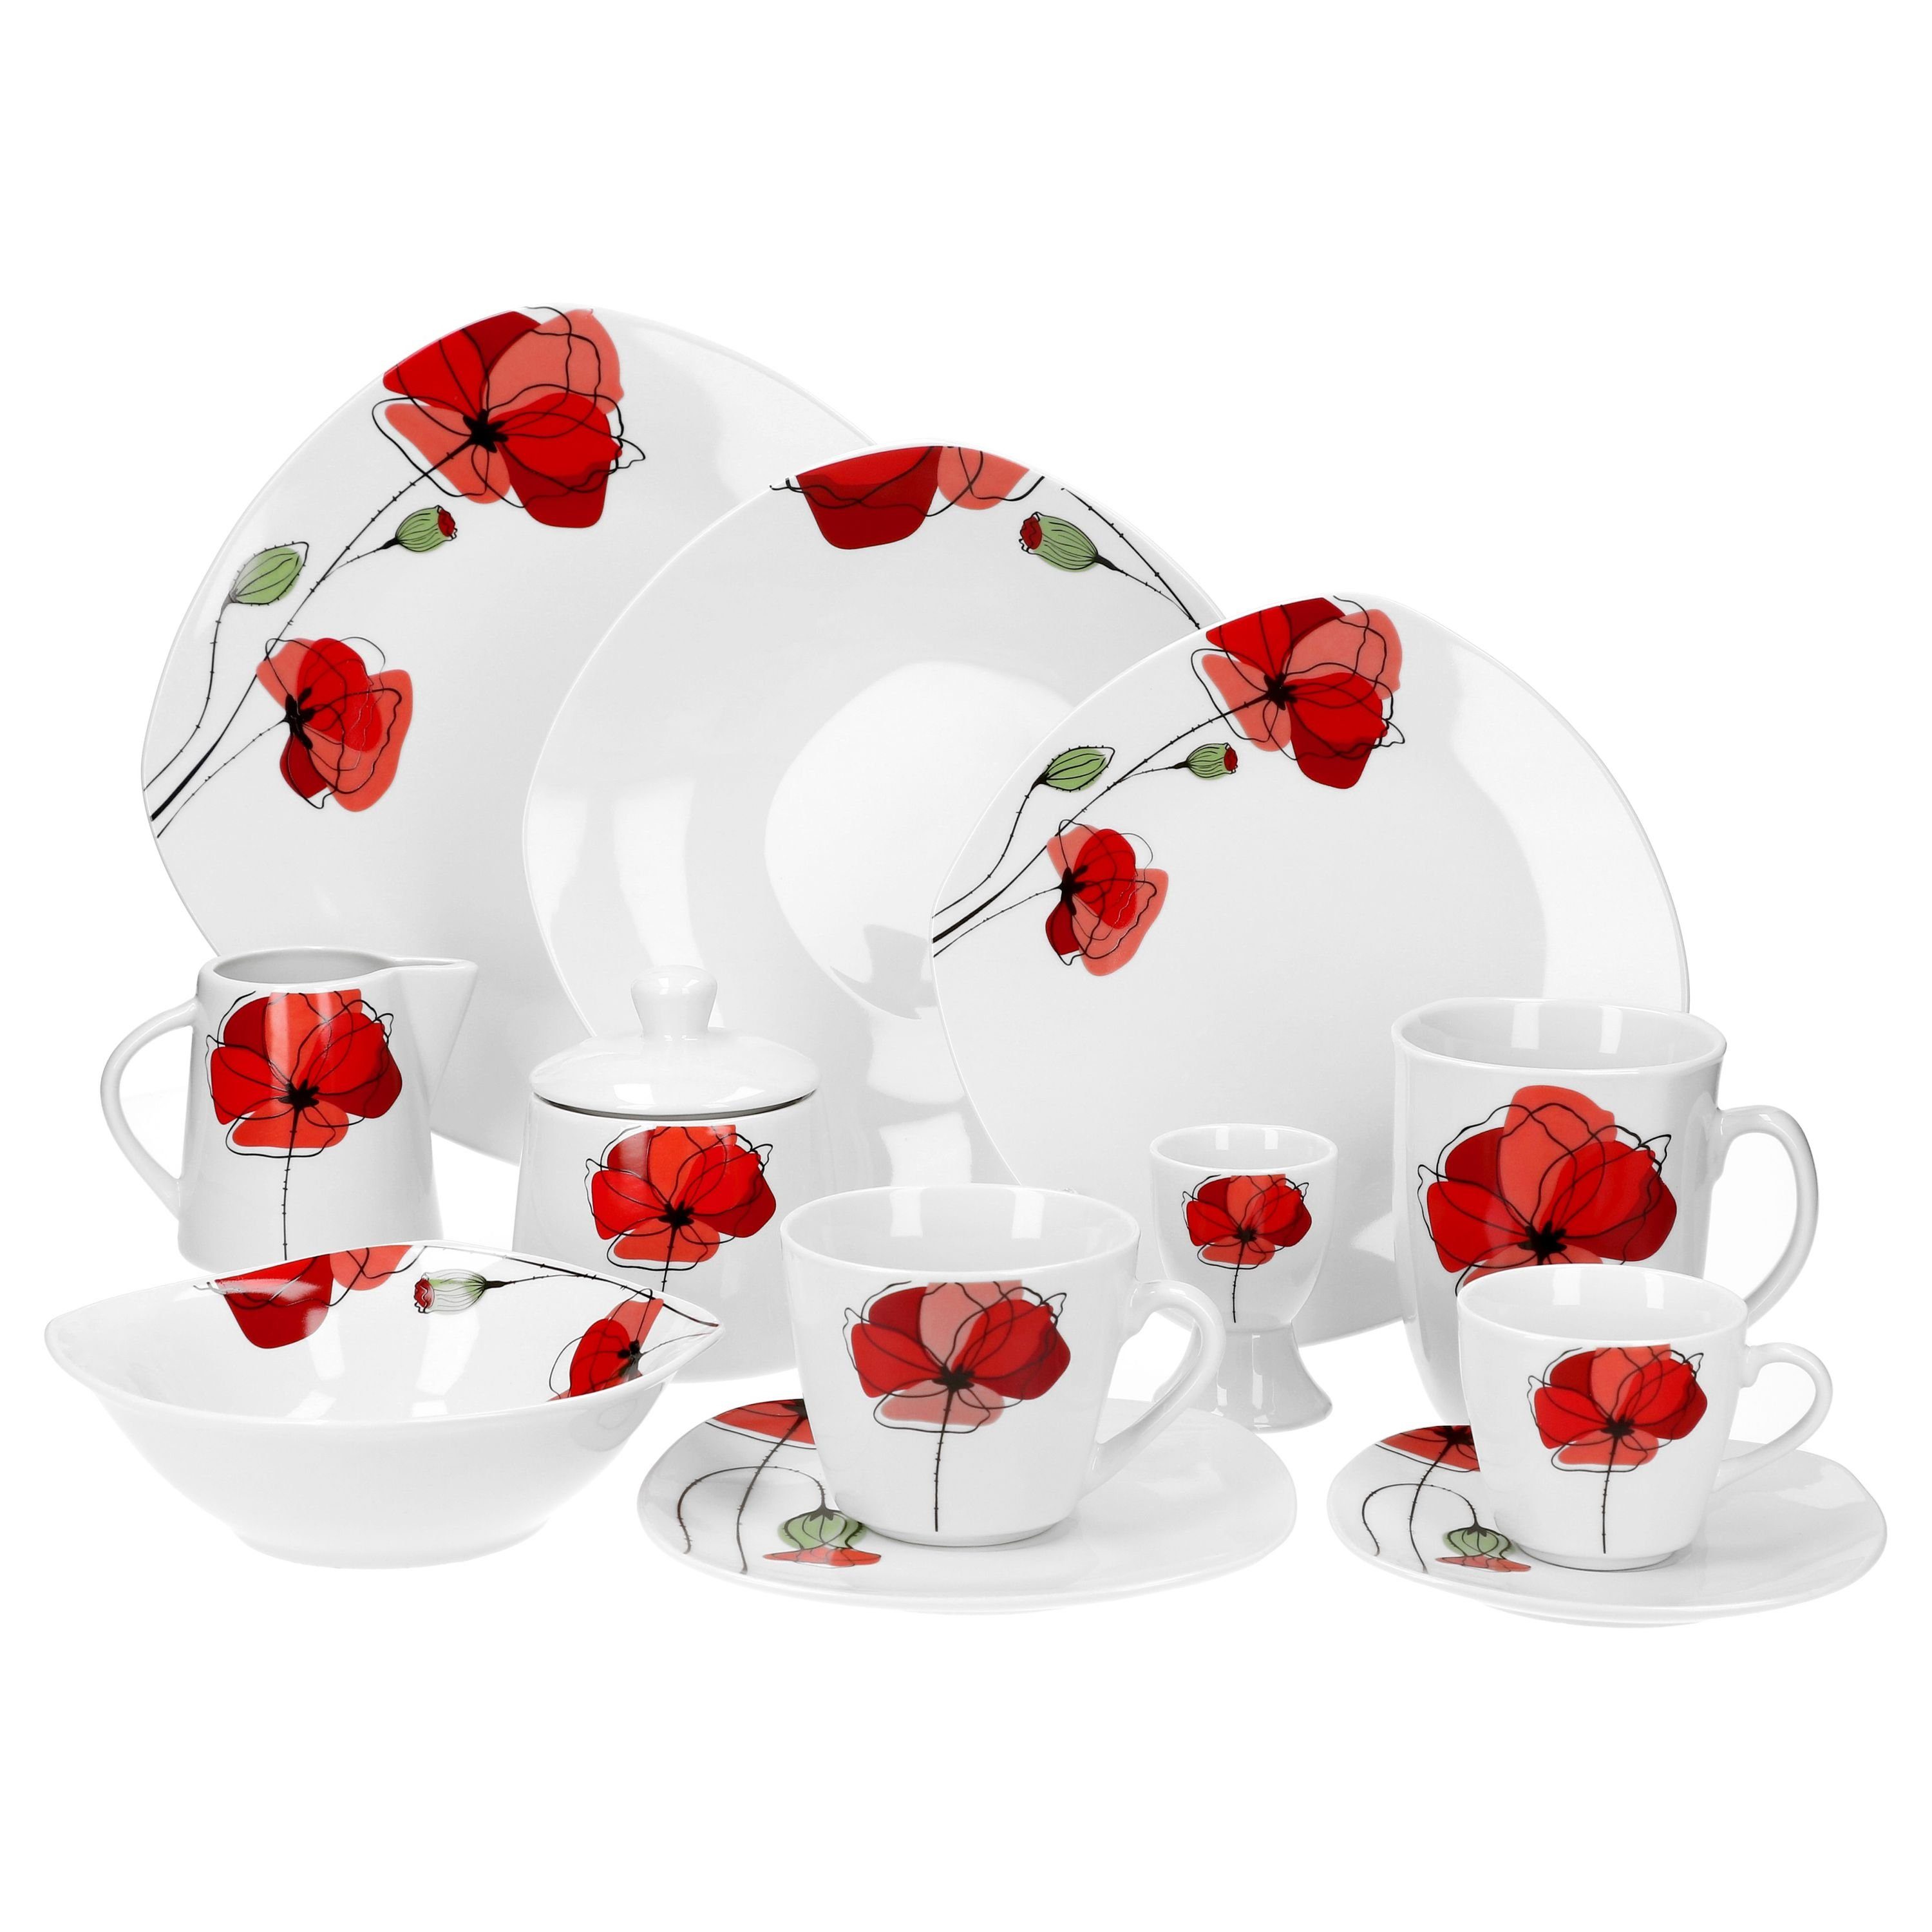 Monika Kombiservice 6 Personen Blumendekor rotes weiß 62tlg. Porzellan van Kombiservice Well